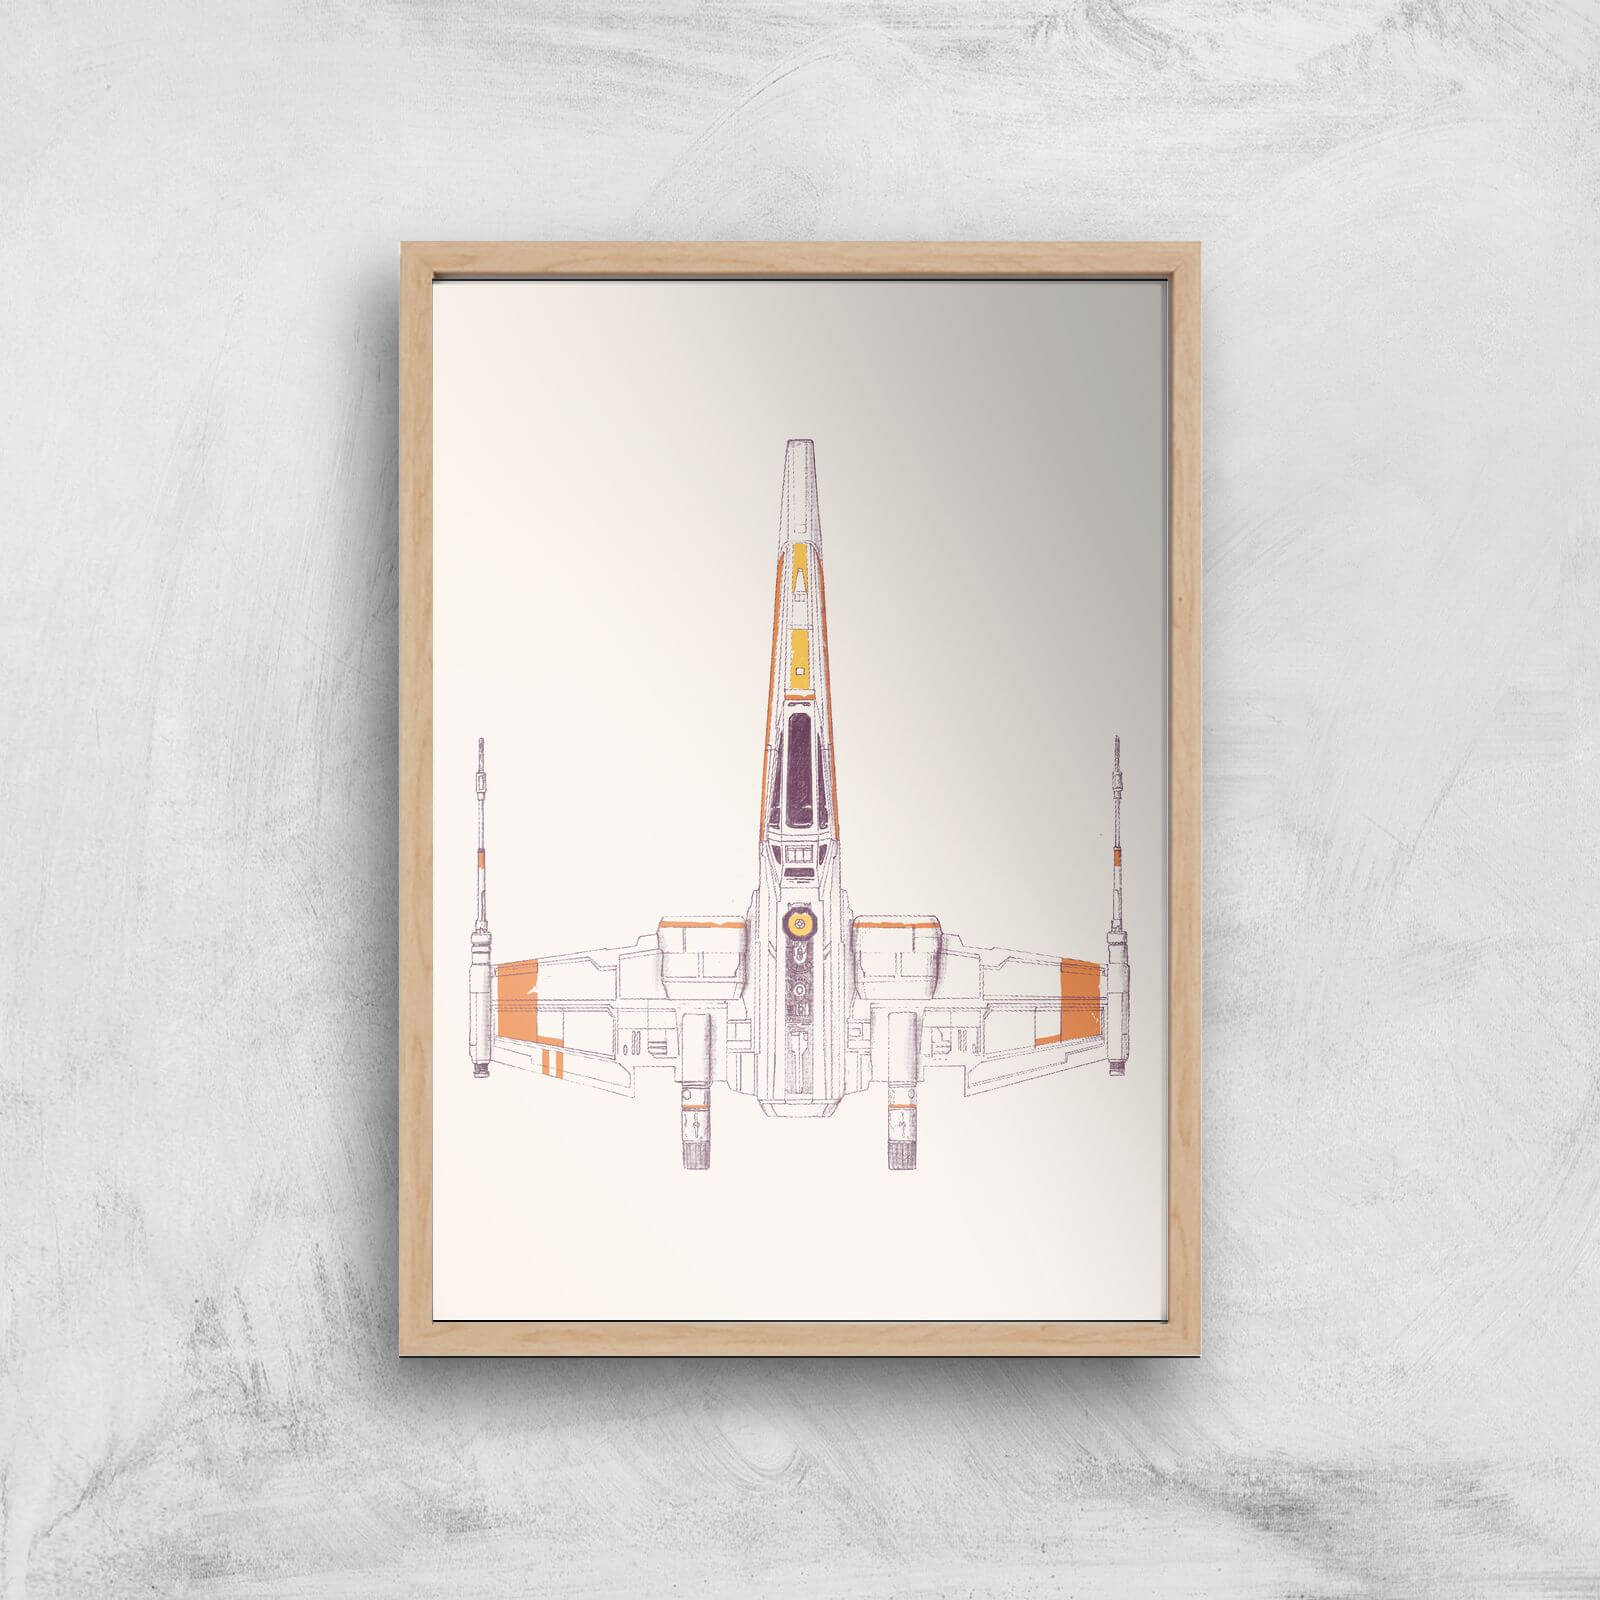 Space Ship Giclee Art Print - A3 - Wooden Frame